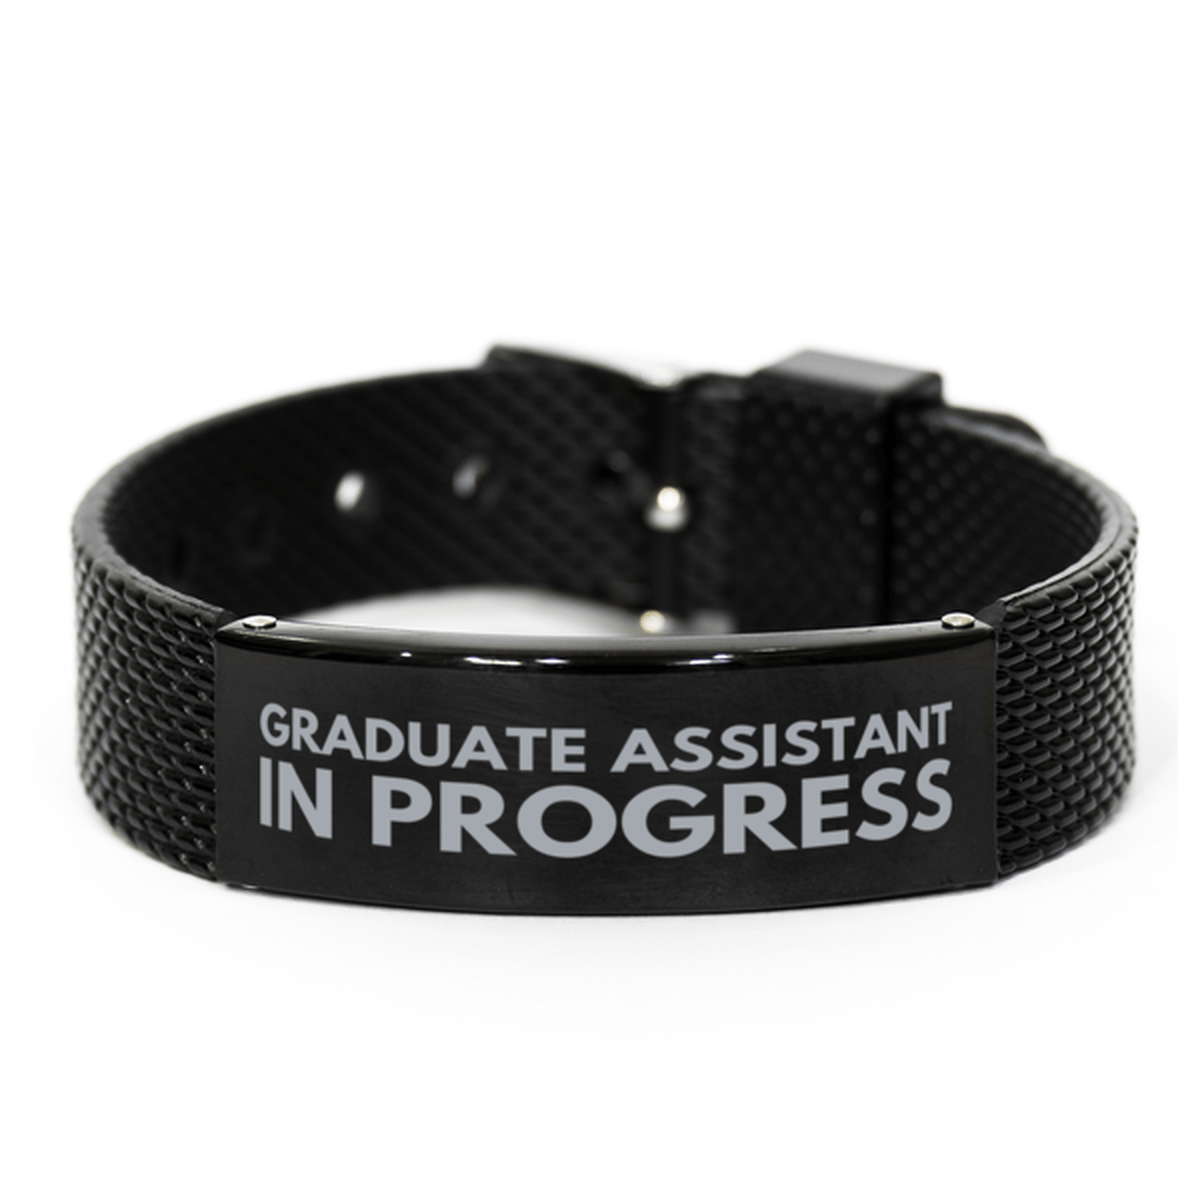 Inspirational Graduate Assistant Black Shark Mesh Bracelet, Graduate Assistant In Progress, Best Graduation Gifts for Students